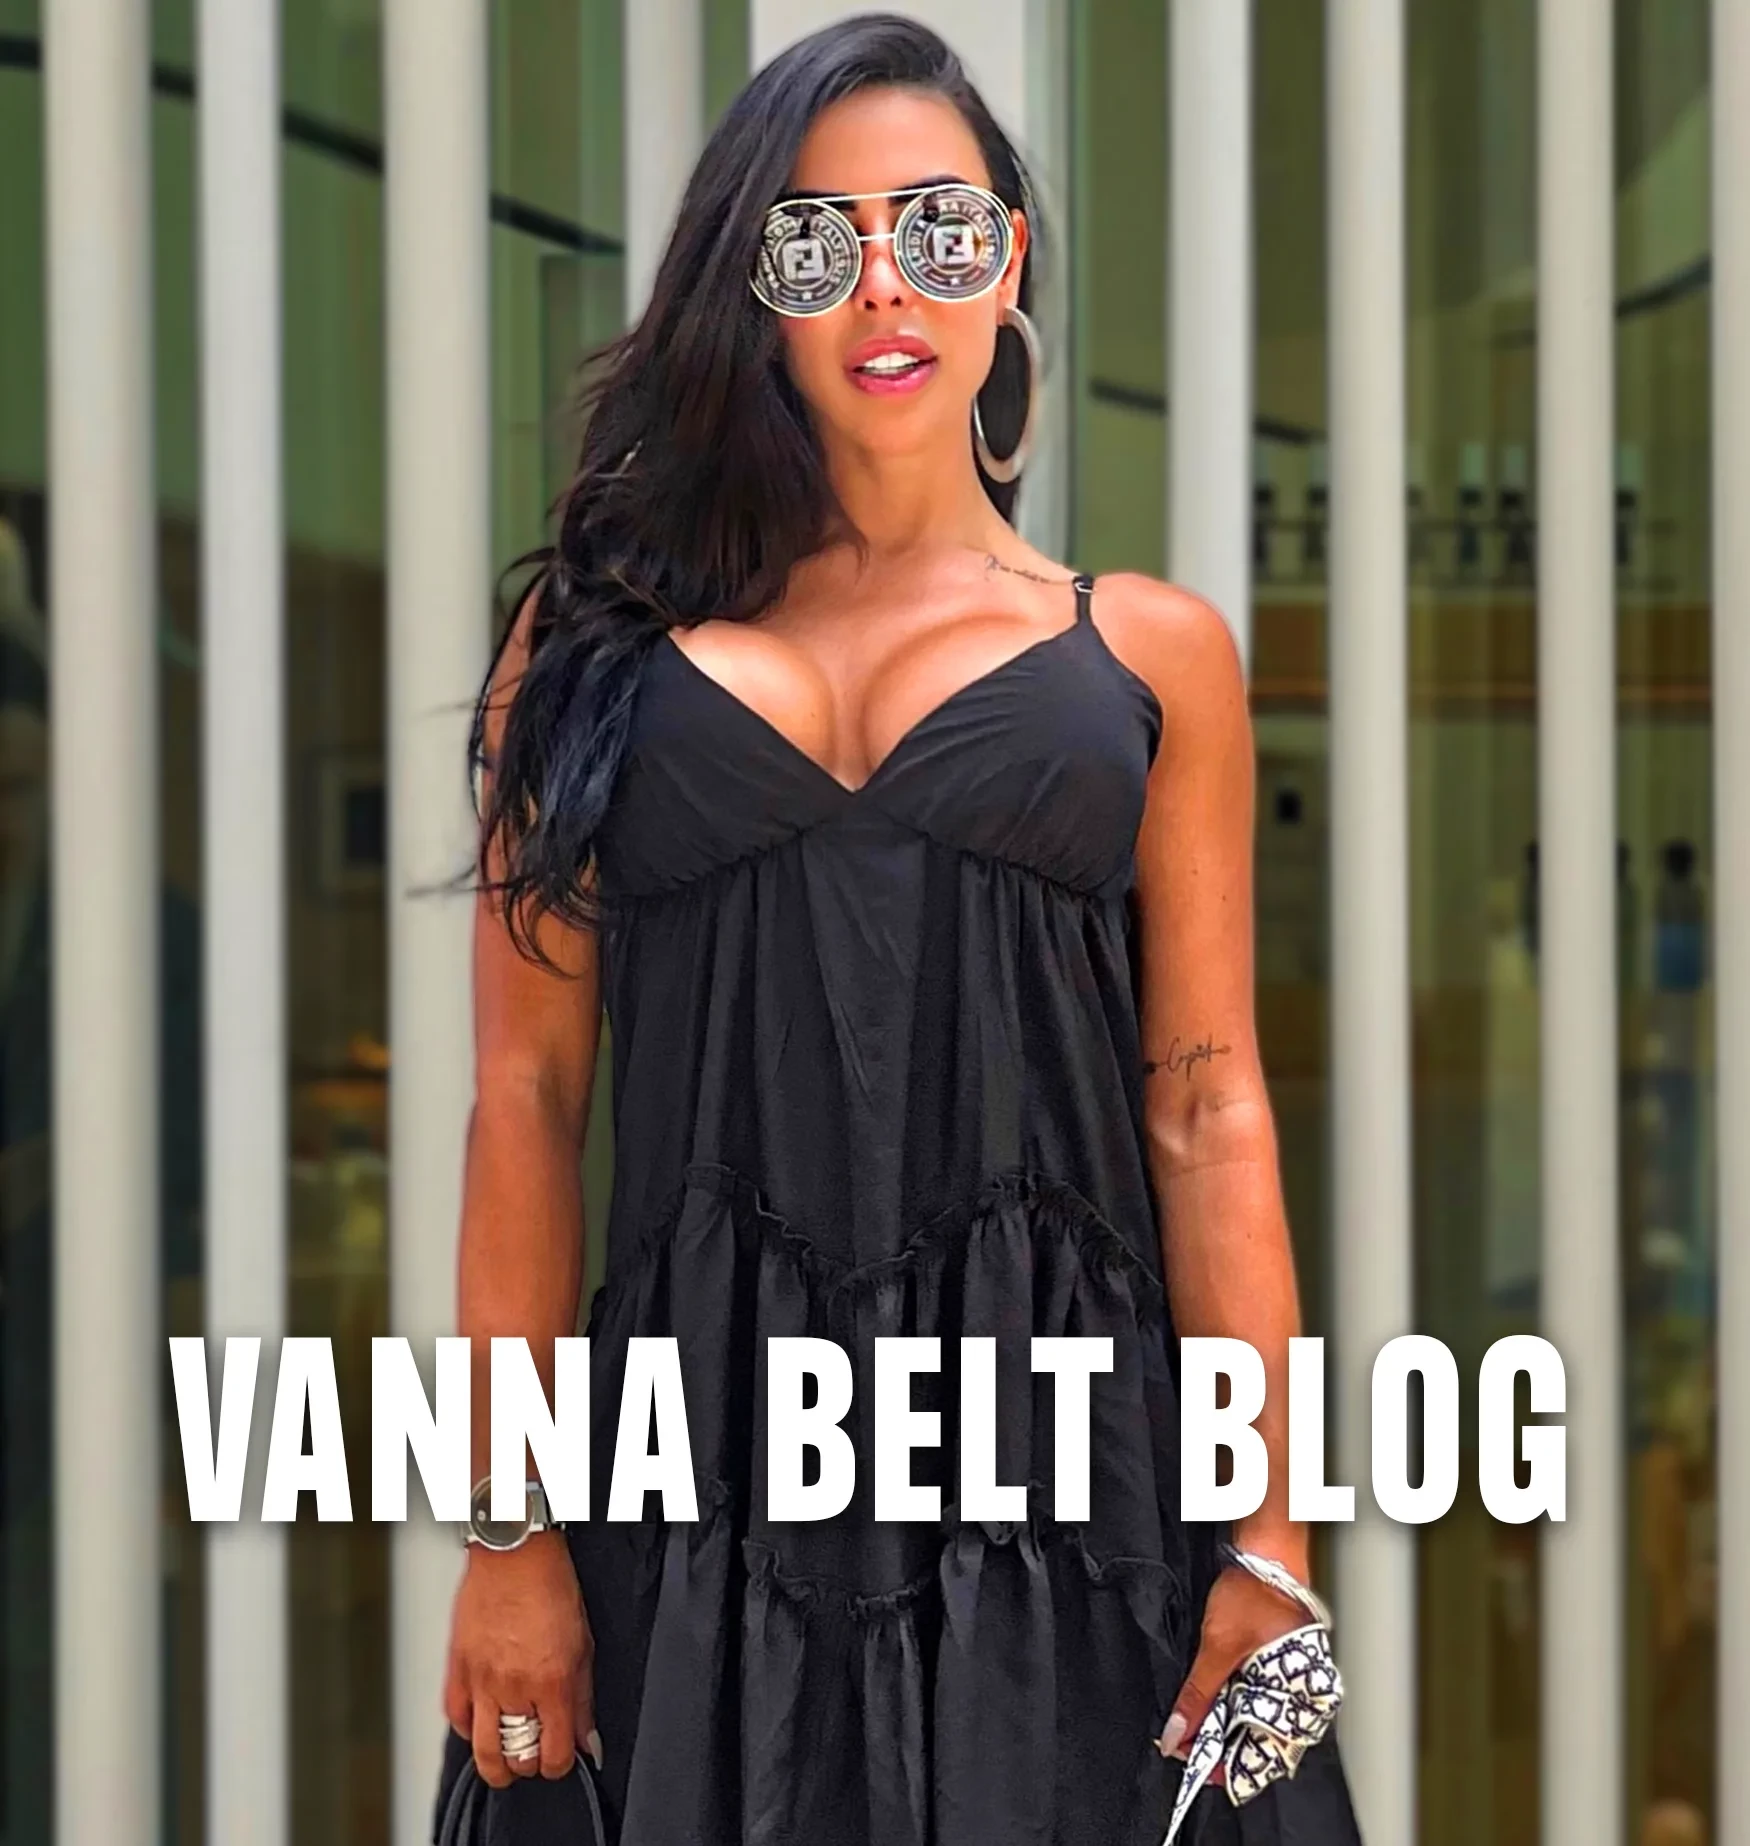 Vanna Bel blog